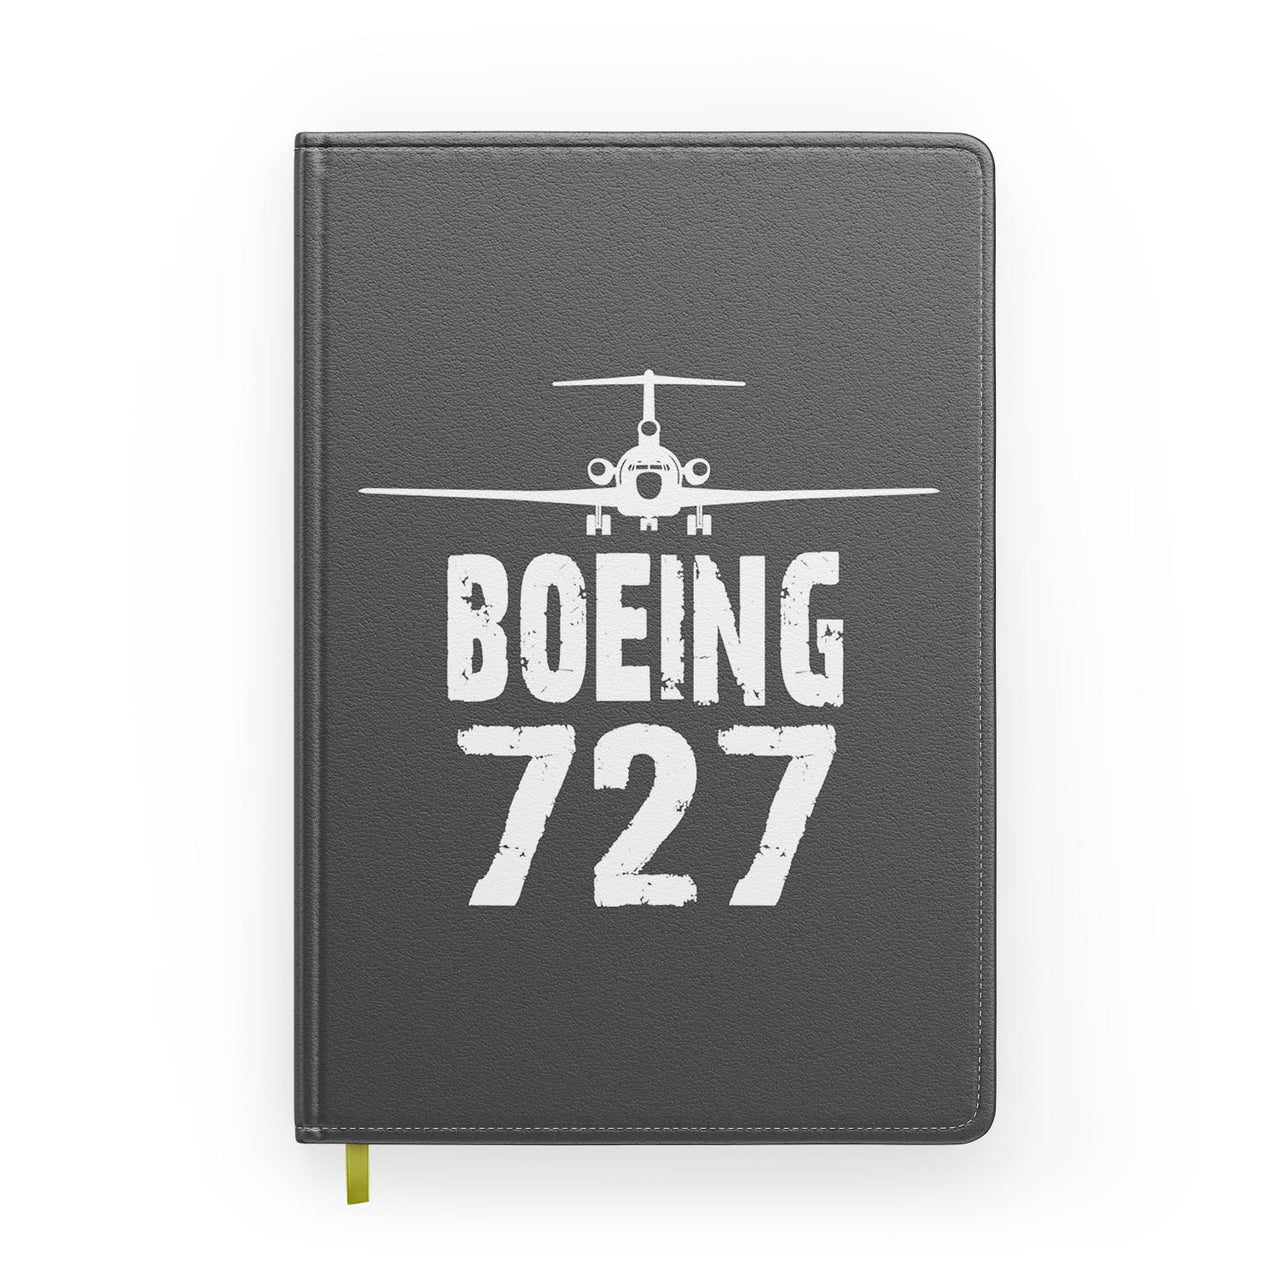 Boeing 727 & Plane Designed Notebooks